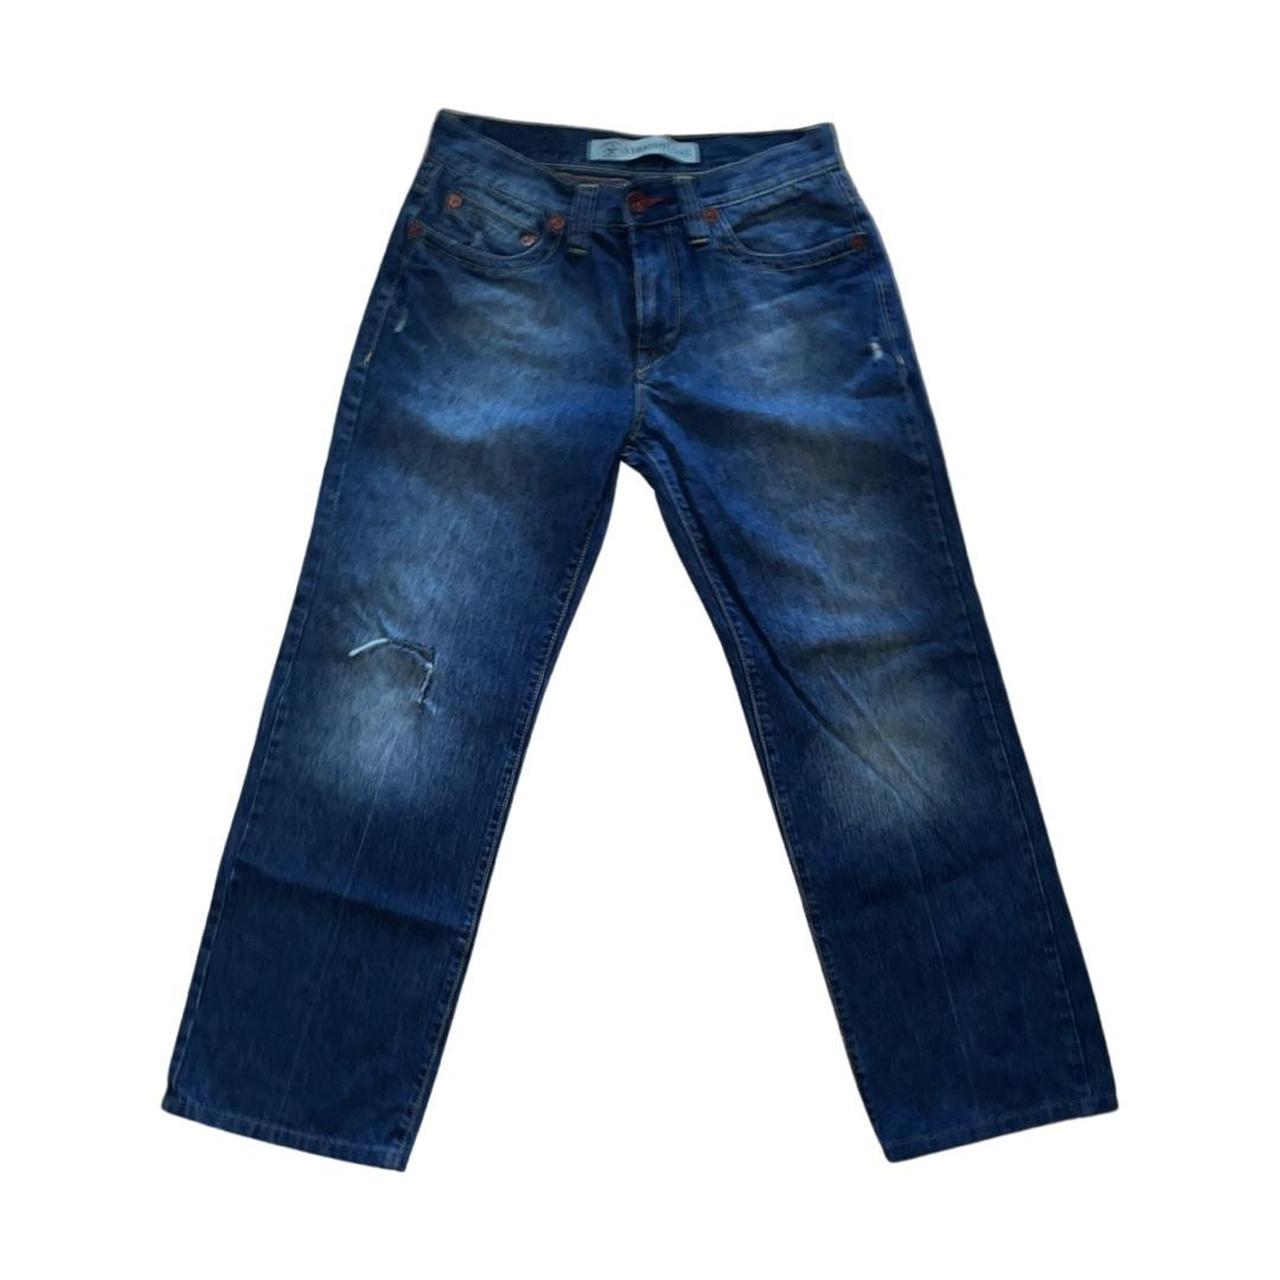 Arizona Men's Blue Jeans (3)